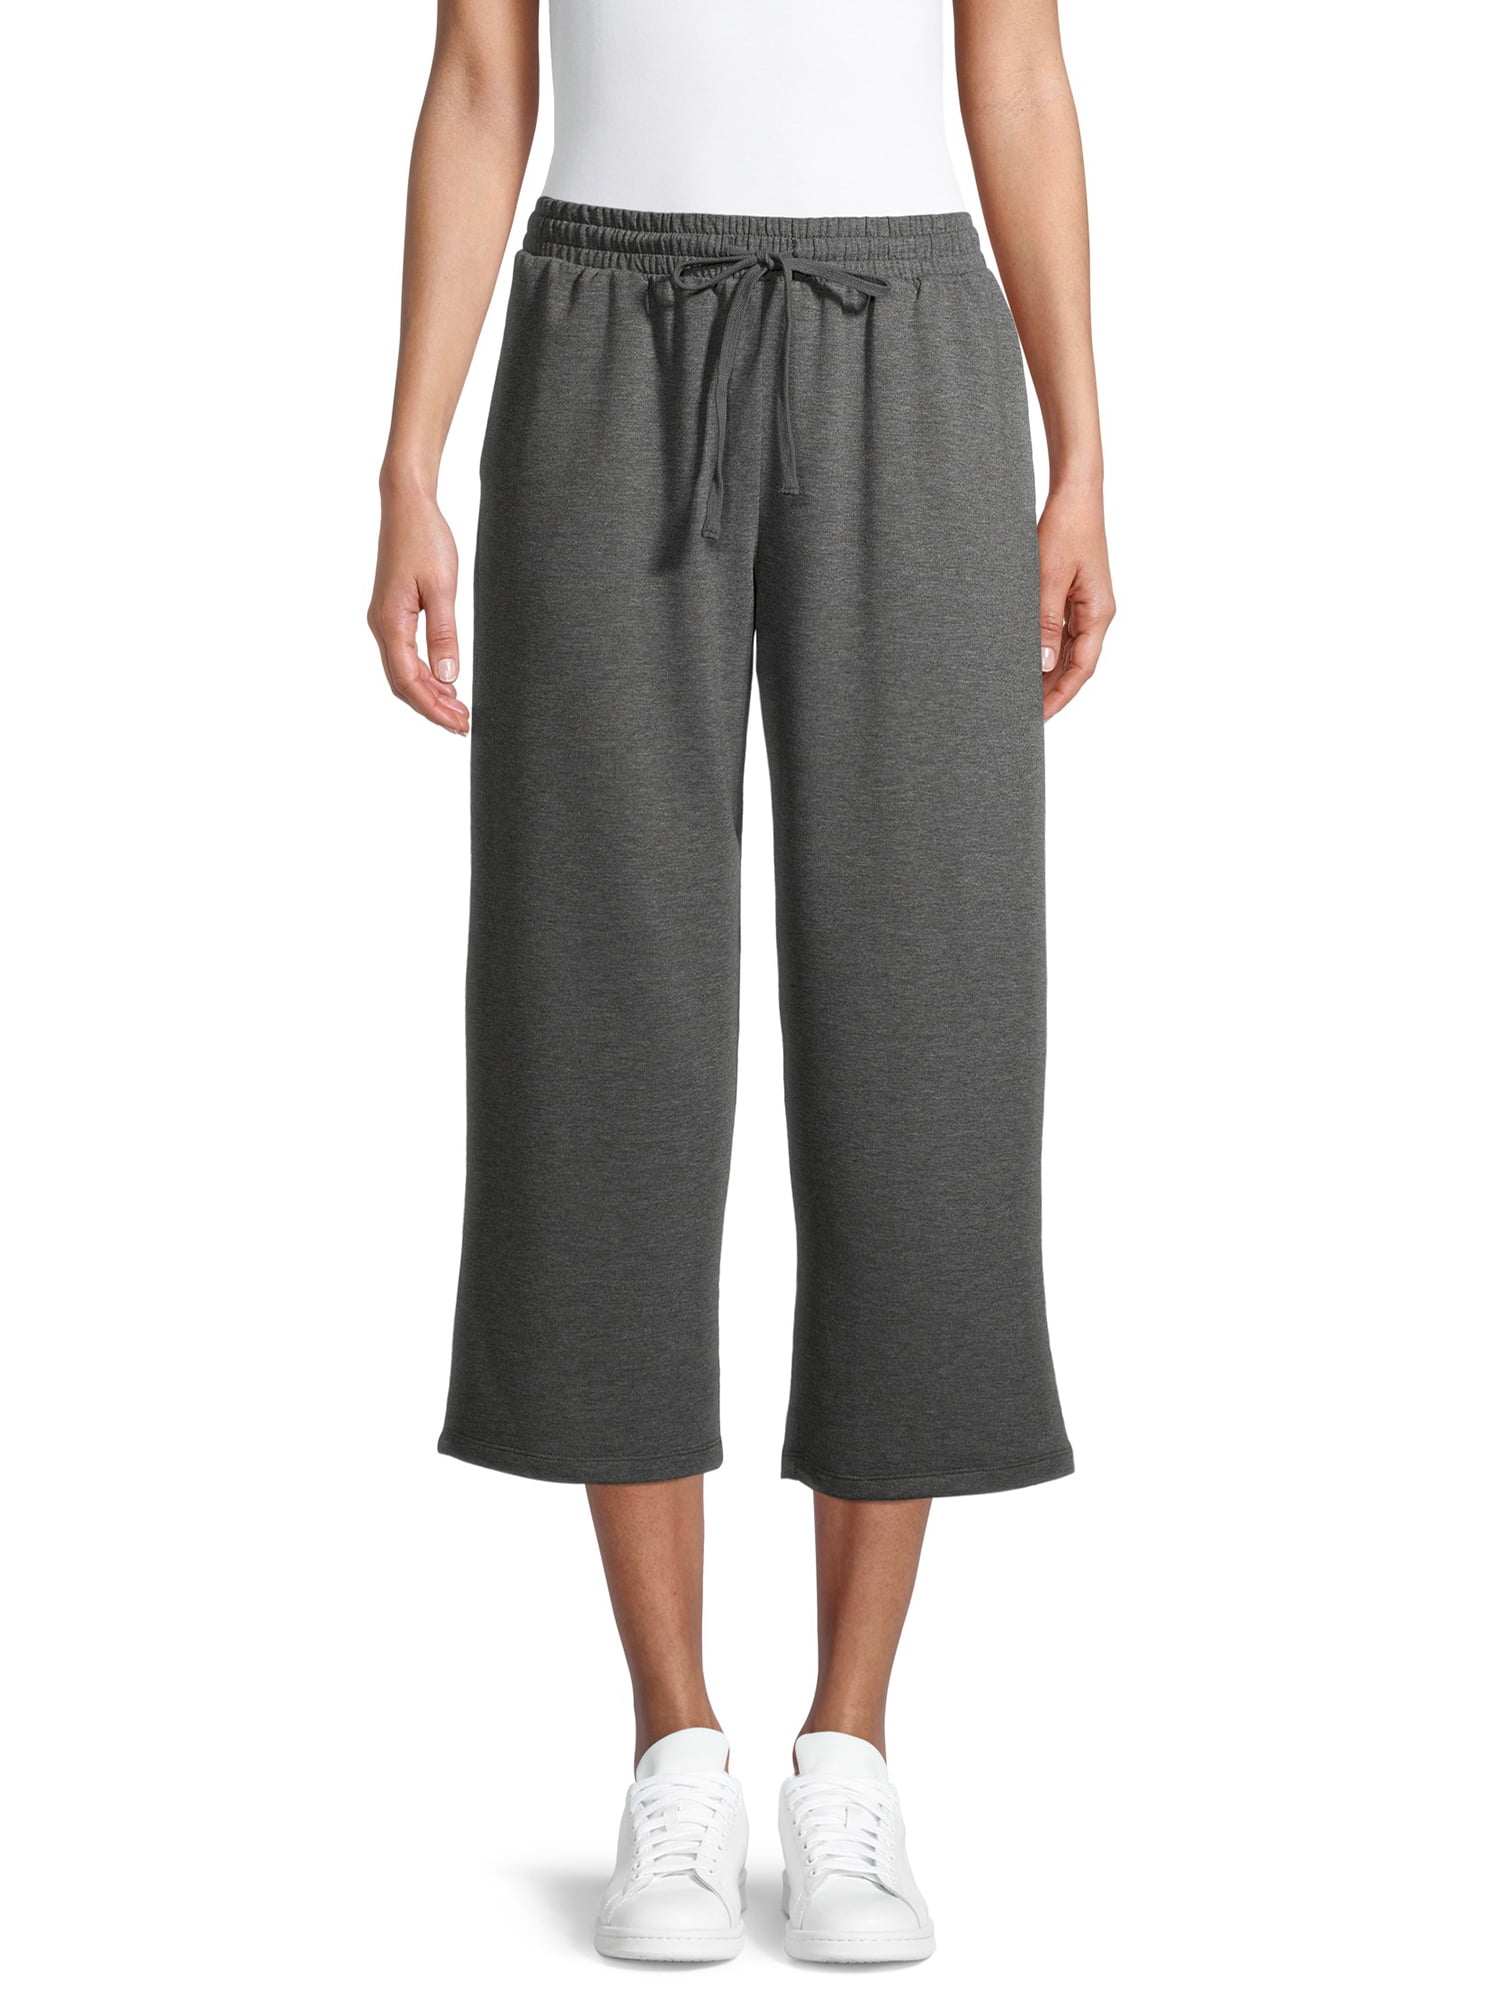 Como Blu Active Fit Cropped Pant (Women's), 1 Count, 1 Pack - Walmart.com